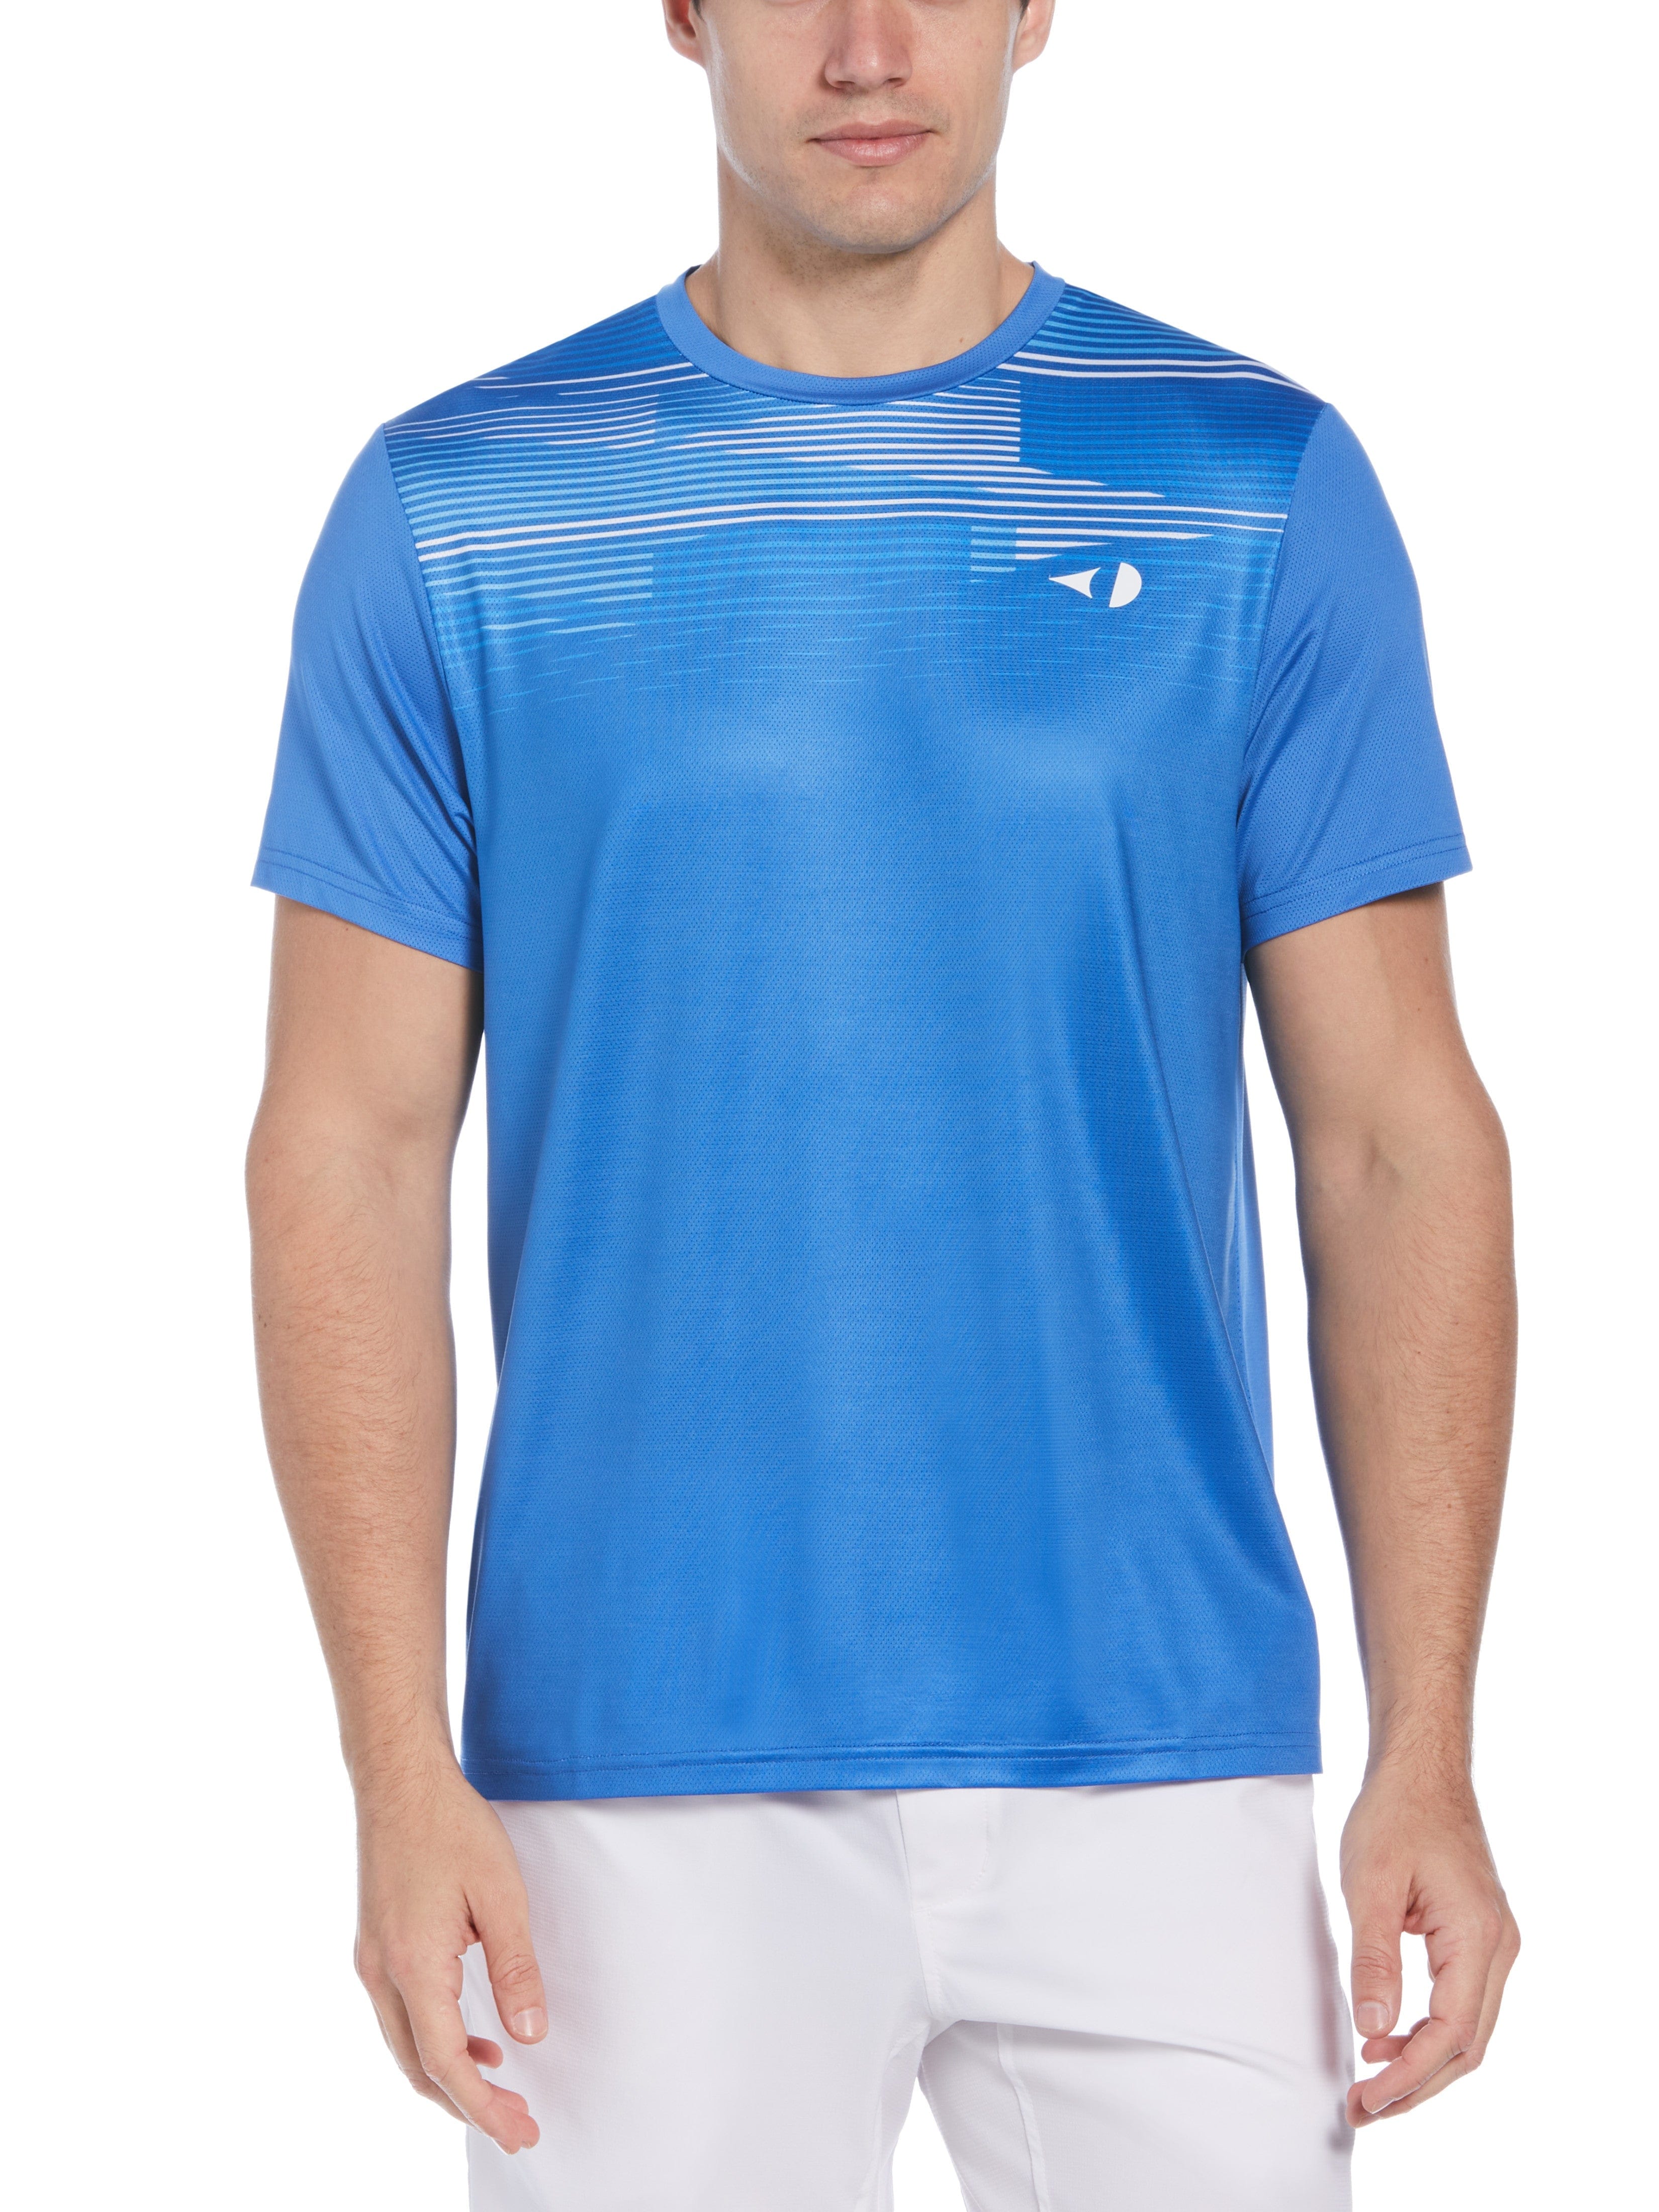 Grand Slam Mens Linear Chest Printed Tennis T-Shirt, Size Medium, Egyptian Blue, Polyester/Spandex | Golf Apparel Shop